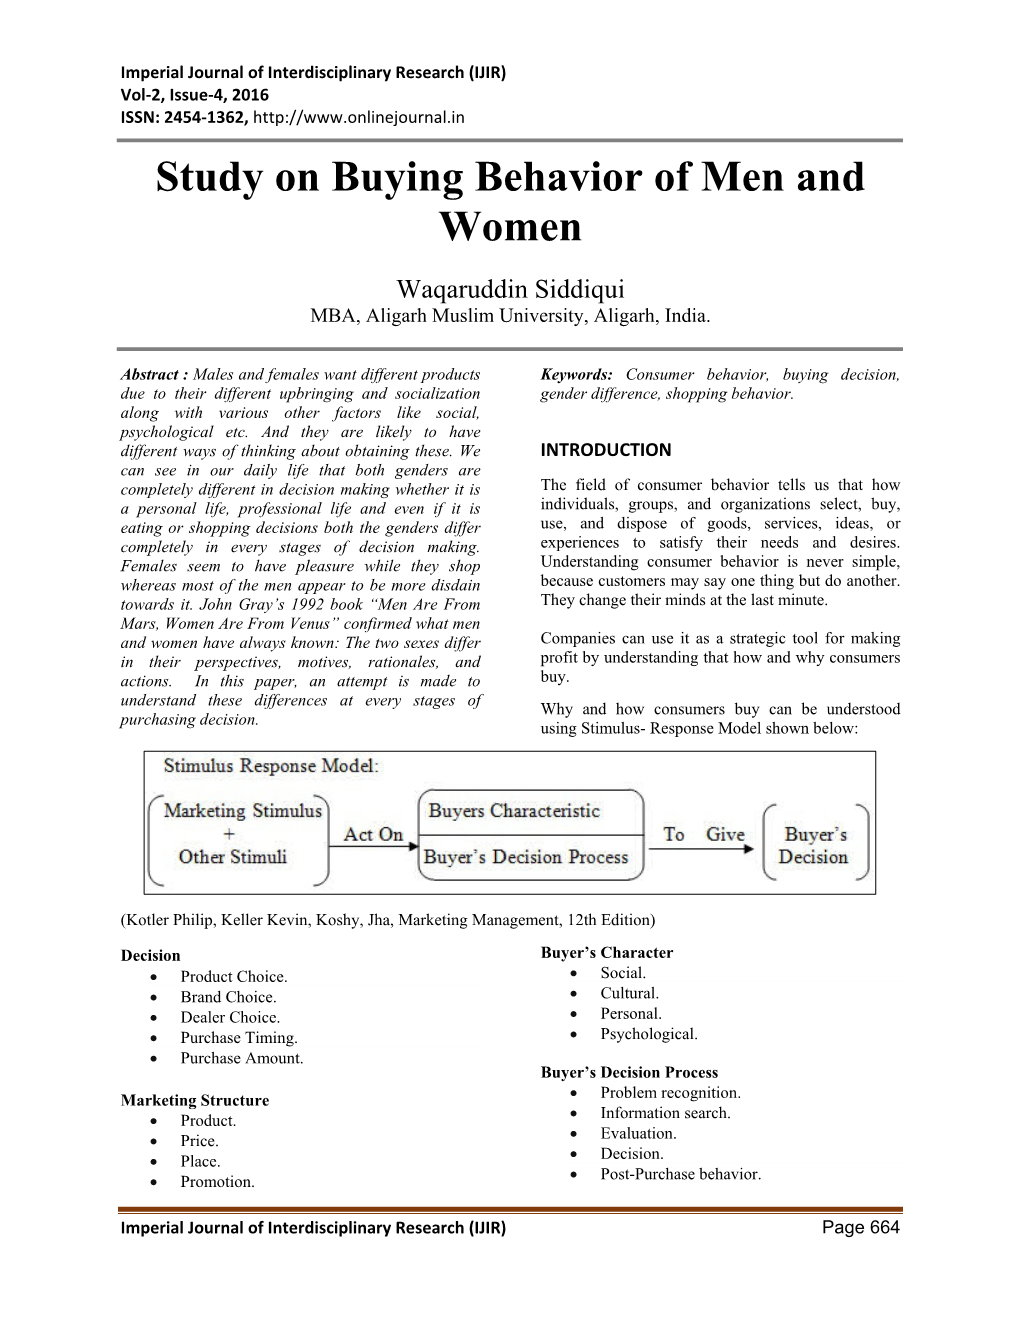 Study on Buying Behavior of Men and Women